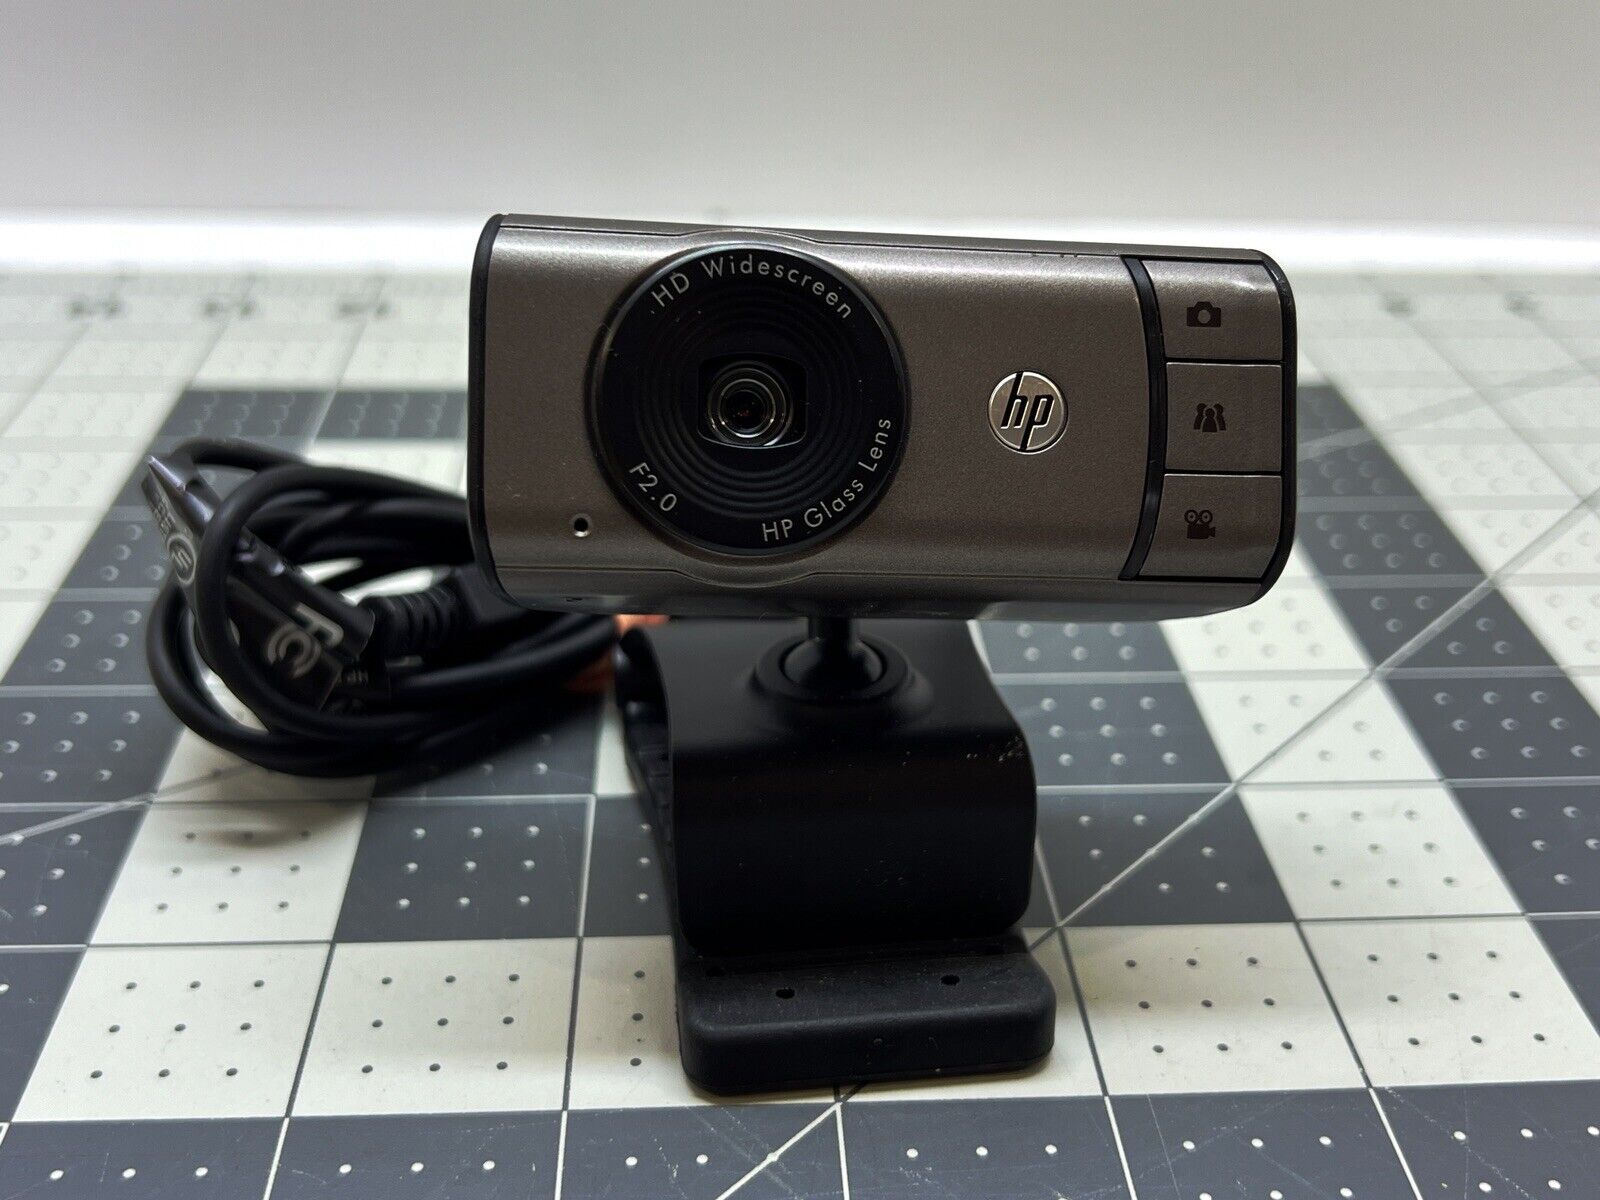 HP HD-3100 Web Cam 720P with TrueVision USB 2.0 5 MP Still Photo. Working